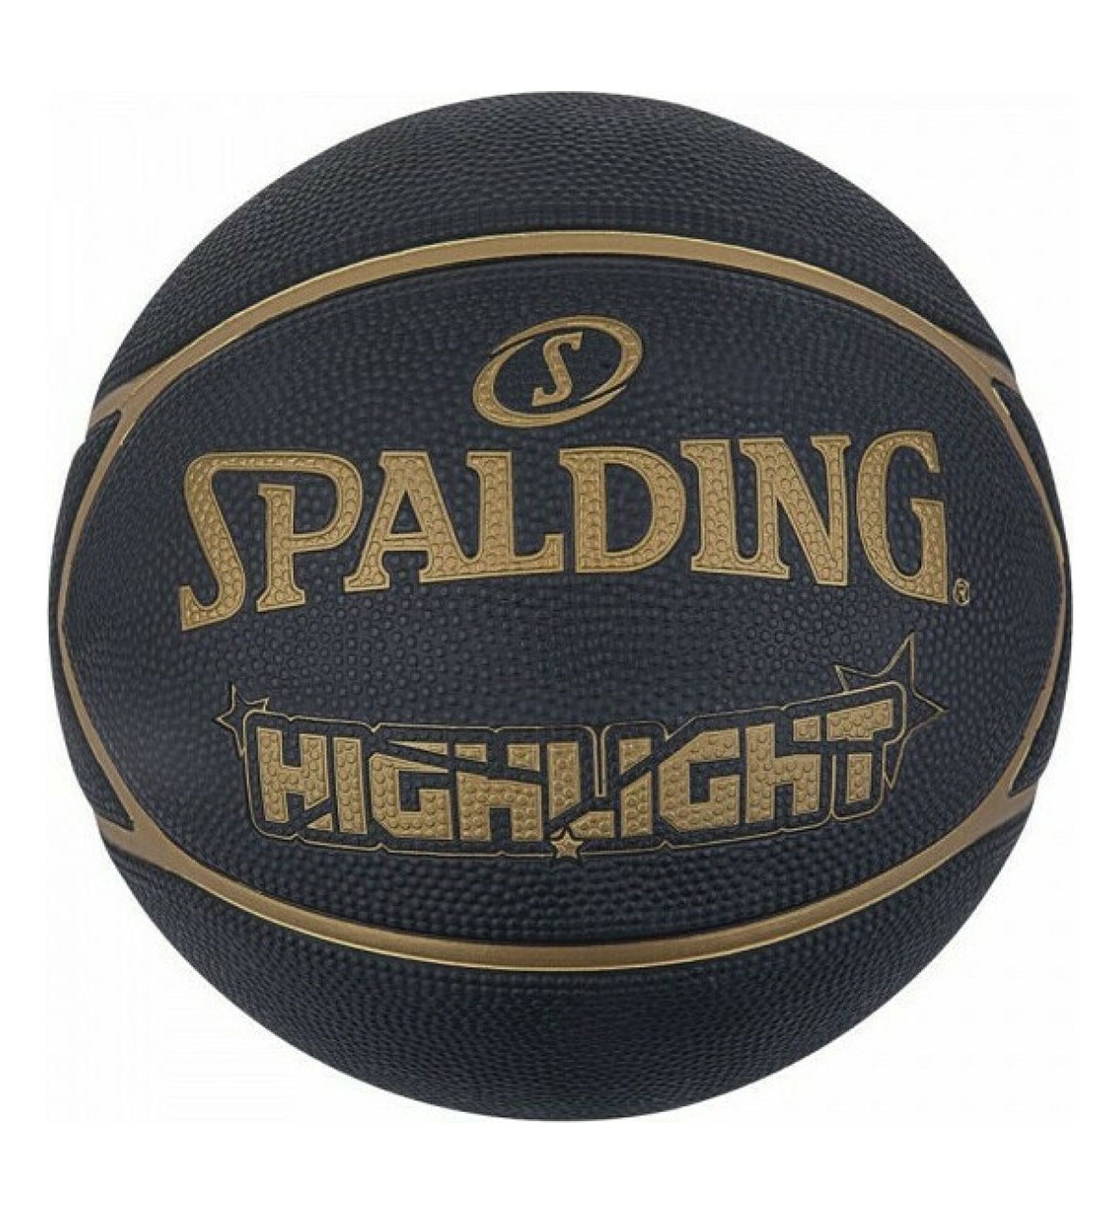 Spalding Ss22 Highlight Black/Gold Sz7 Rubber Basketball